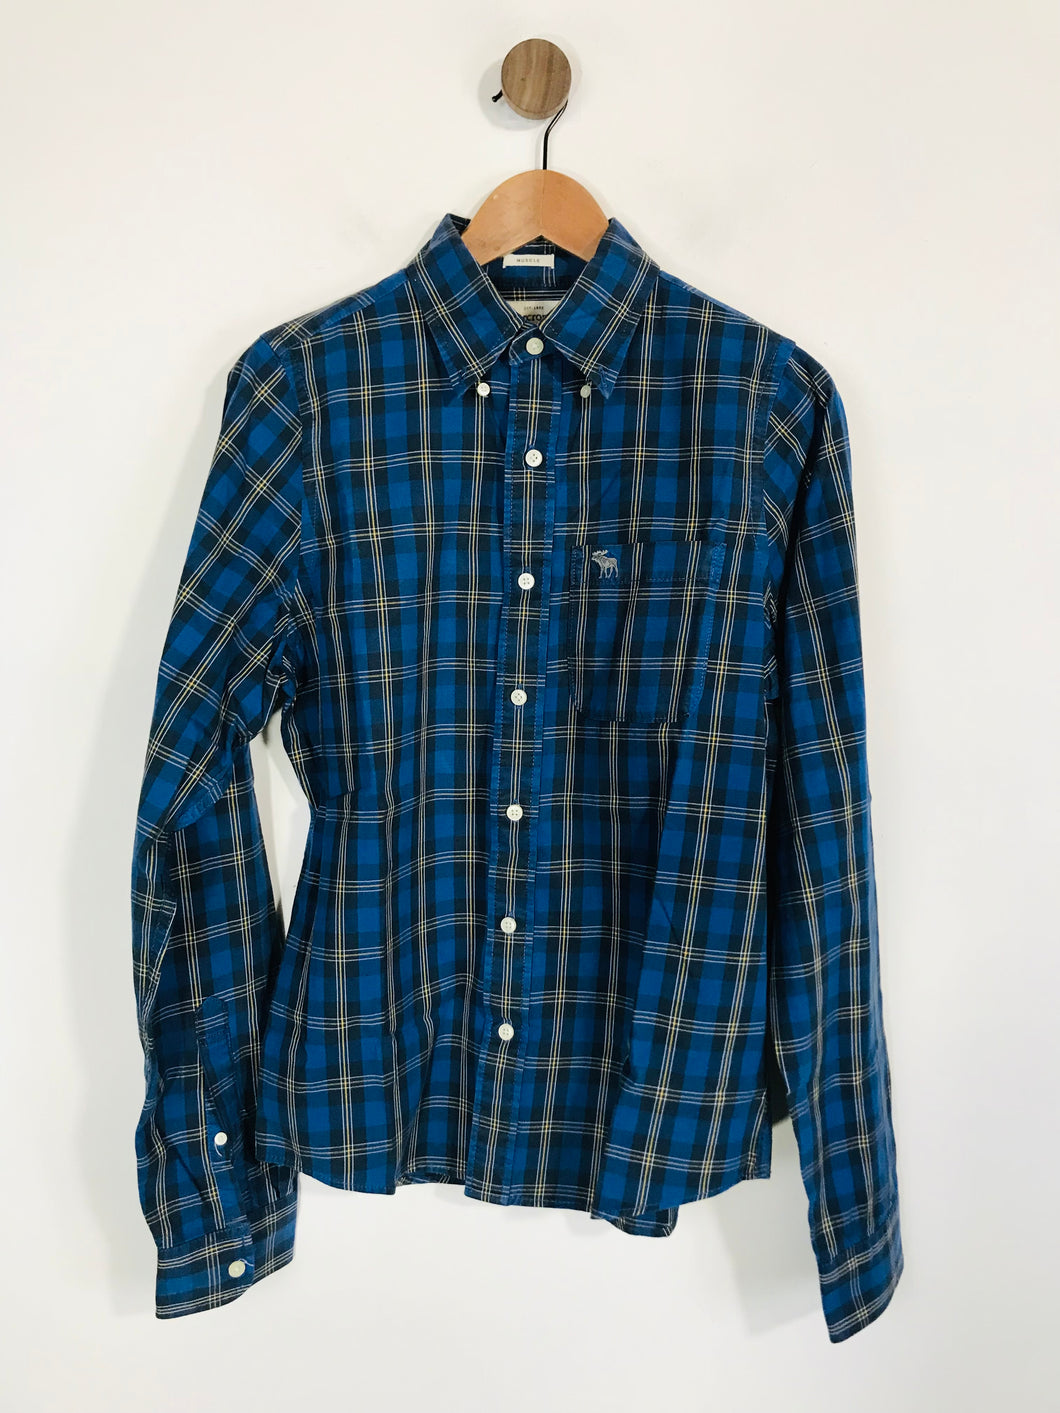 Abercrombie & Fitch Men's Cotton Check Gingham Button-Up Shirt | M | Blue